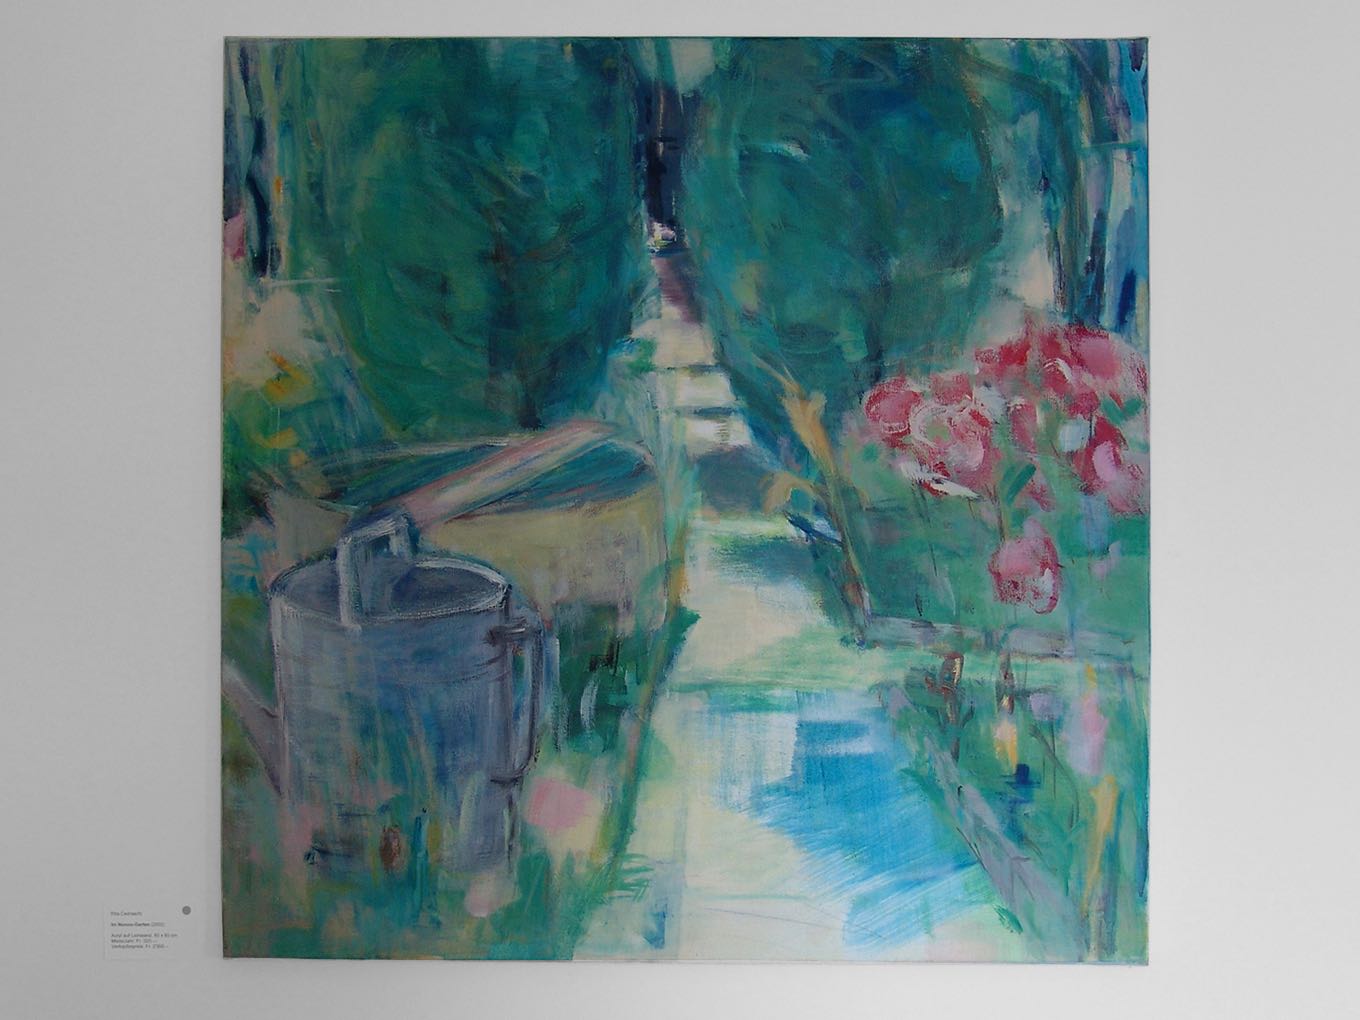 Rita Cedraschi: Im Nonno-Garten, 2002, Acryl auf Leinwand, 80 x 80cm